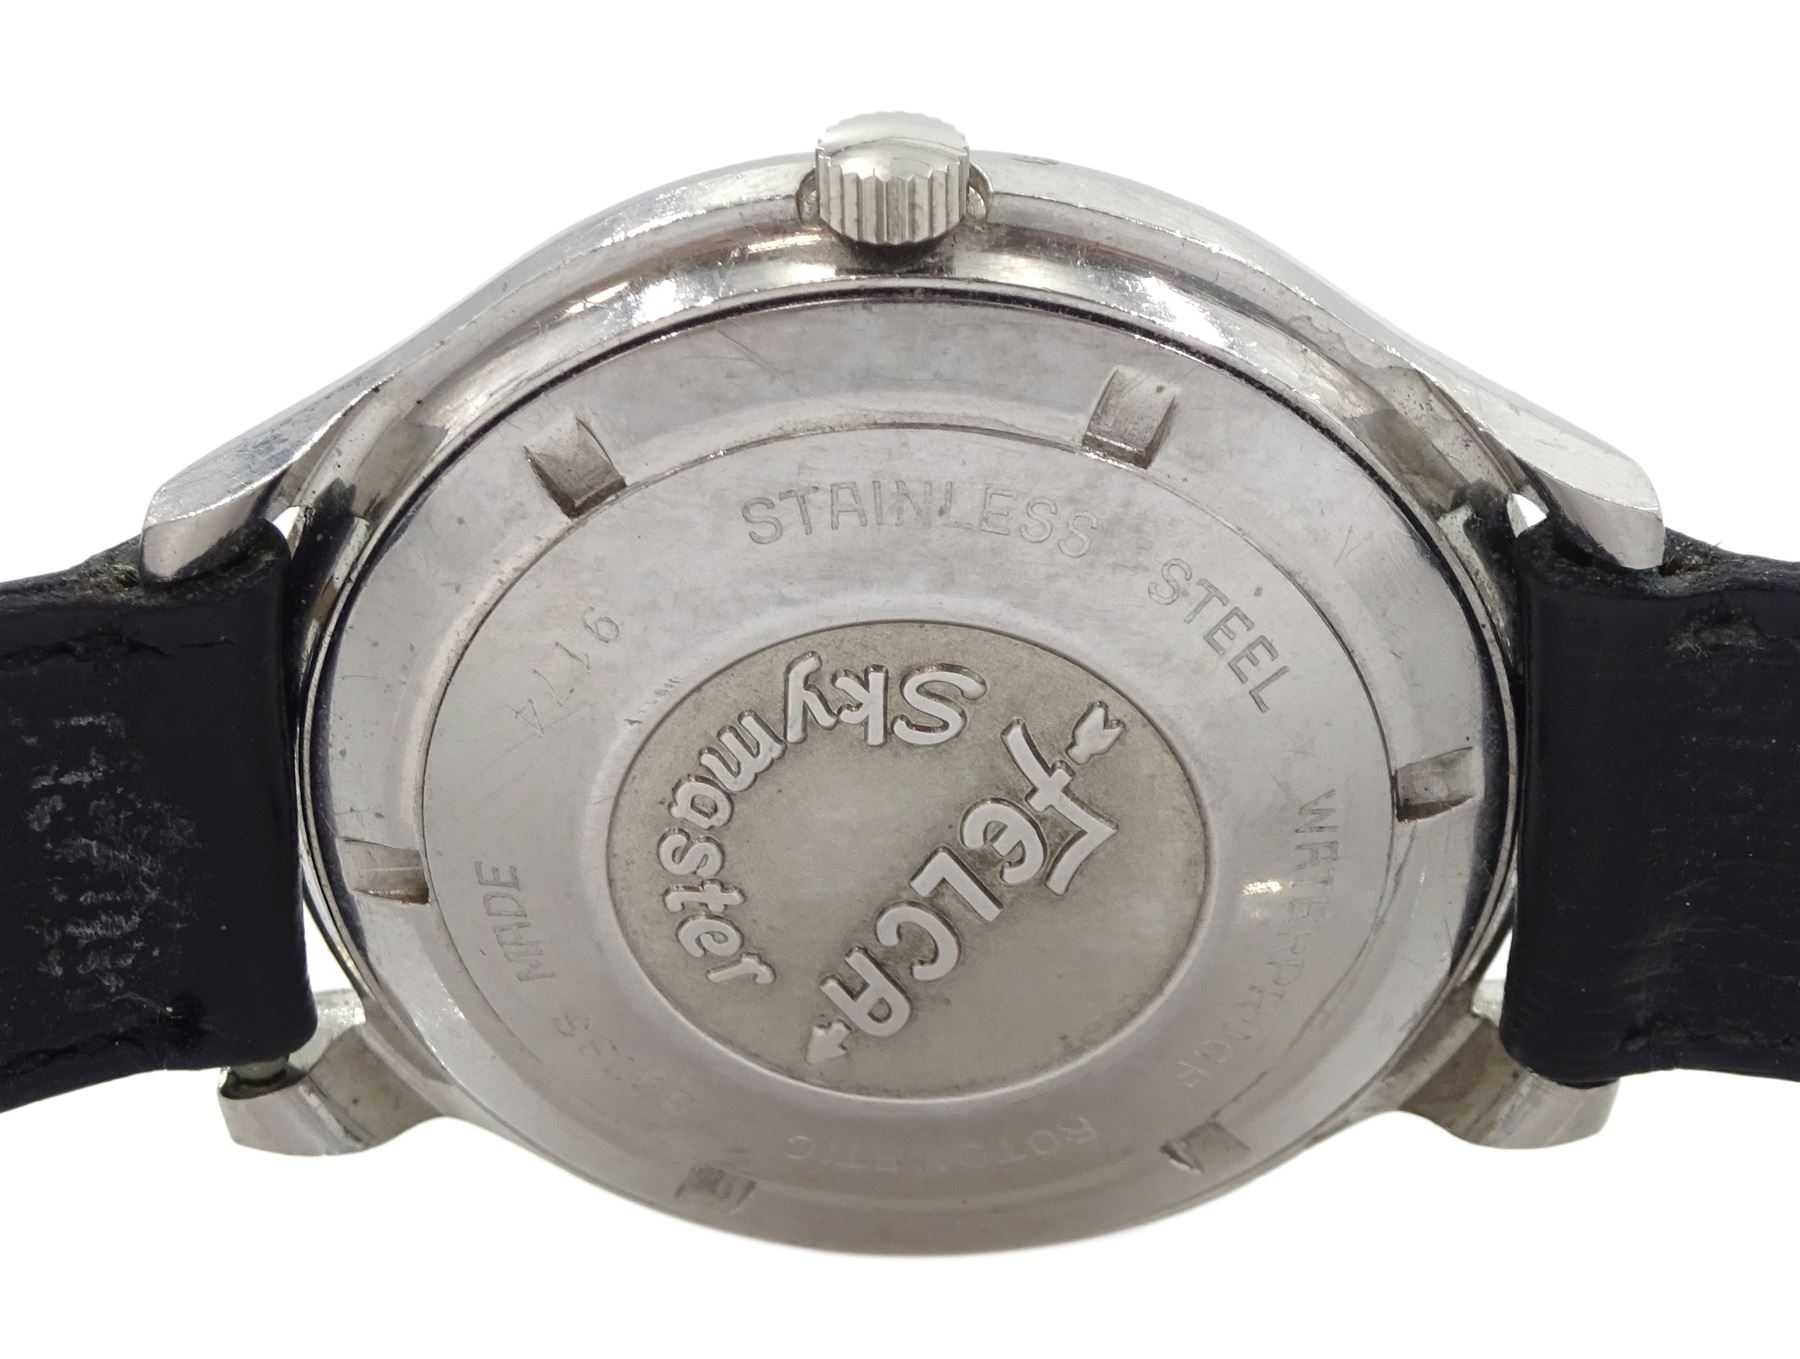 Cardinal Submarine gentleman's stainless steel manual wind wristwatch - Image 3 of 3